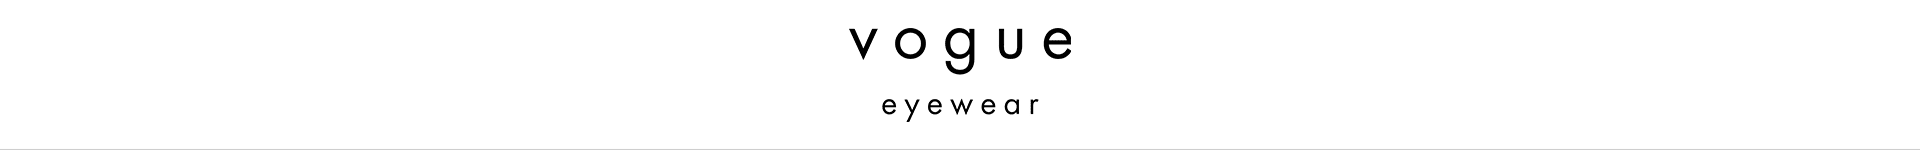 Shop Vogue Eyeglasses